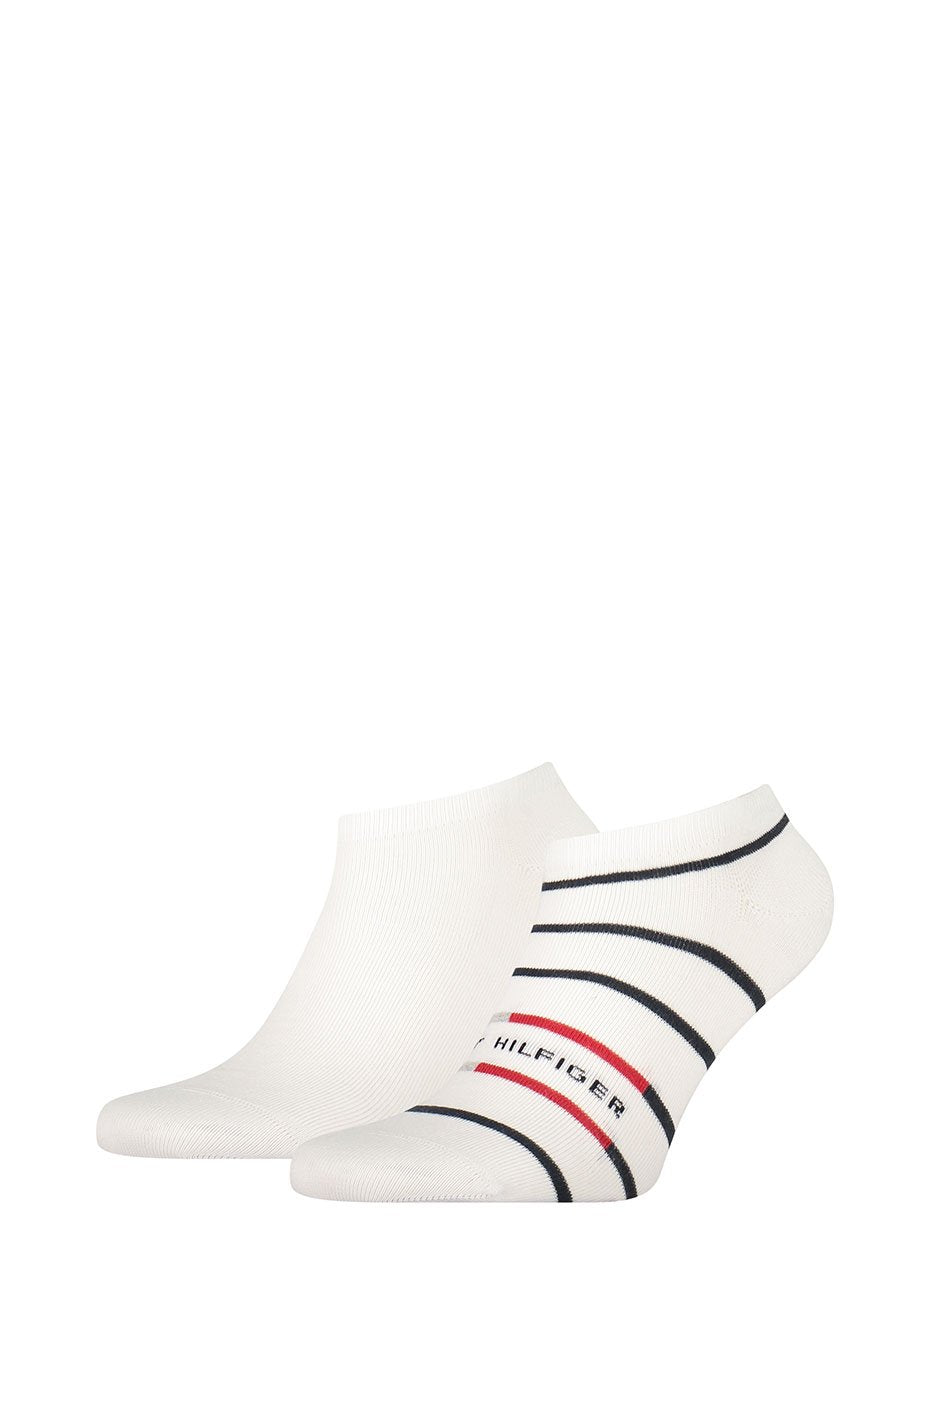 Tommy Hilfiger 2 Pack Men's Breton Stripe Sneaker Socks